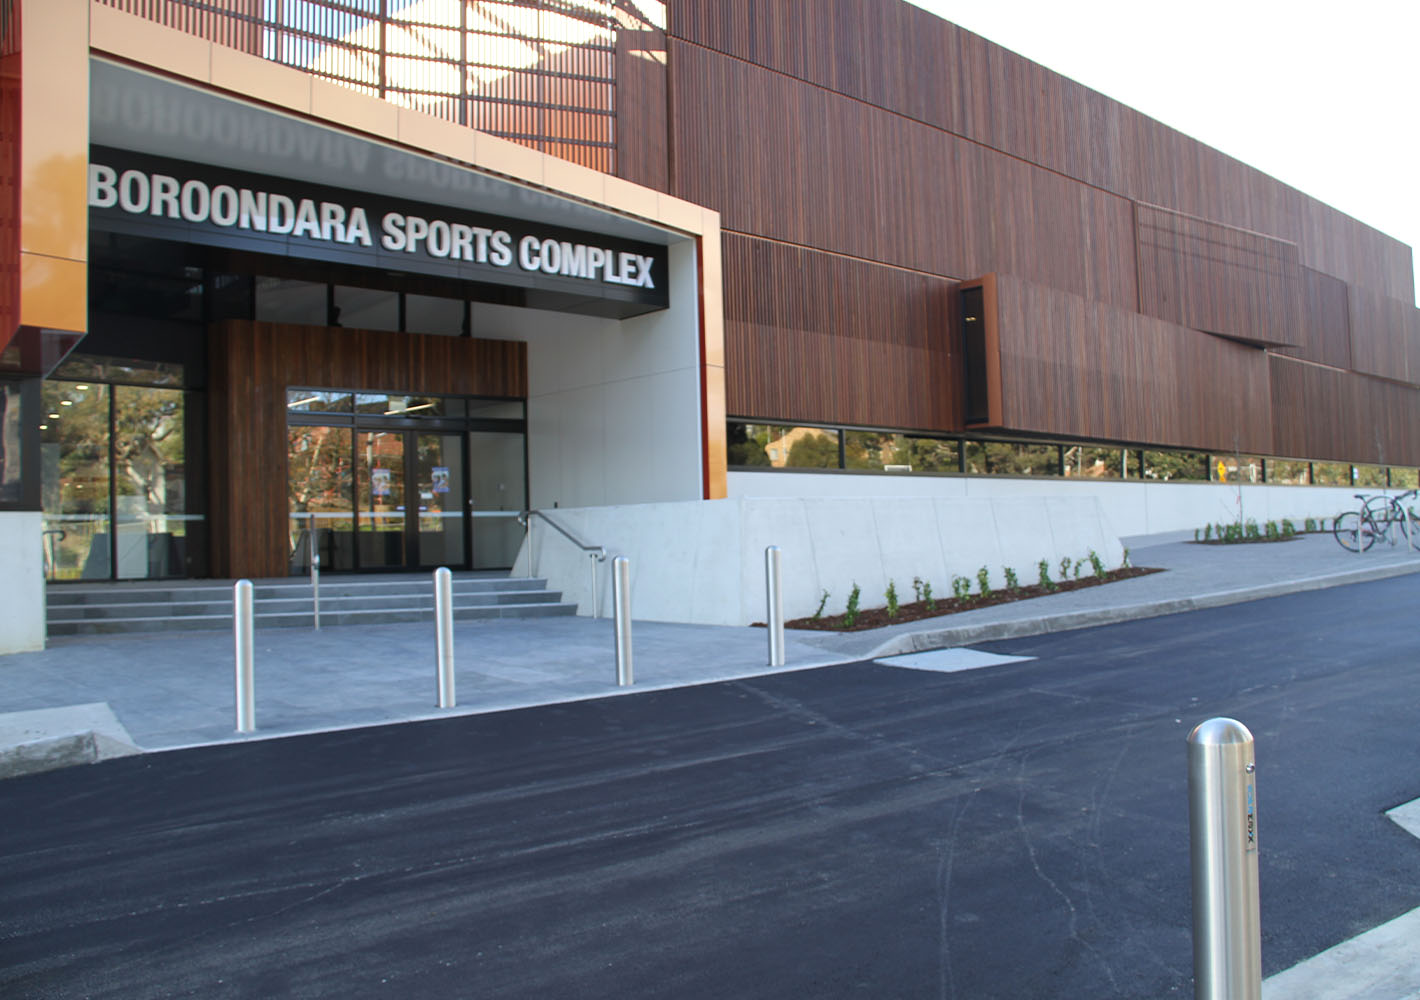 Booroondara Sports Complex